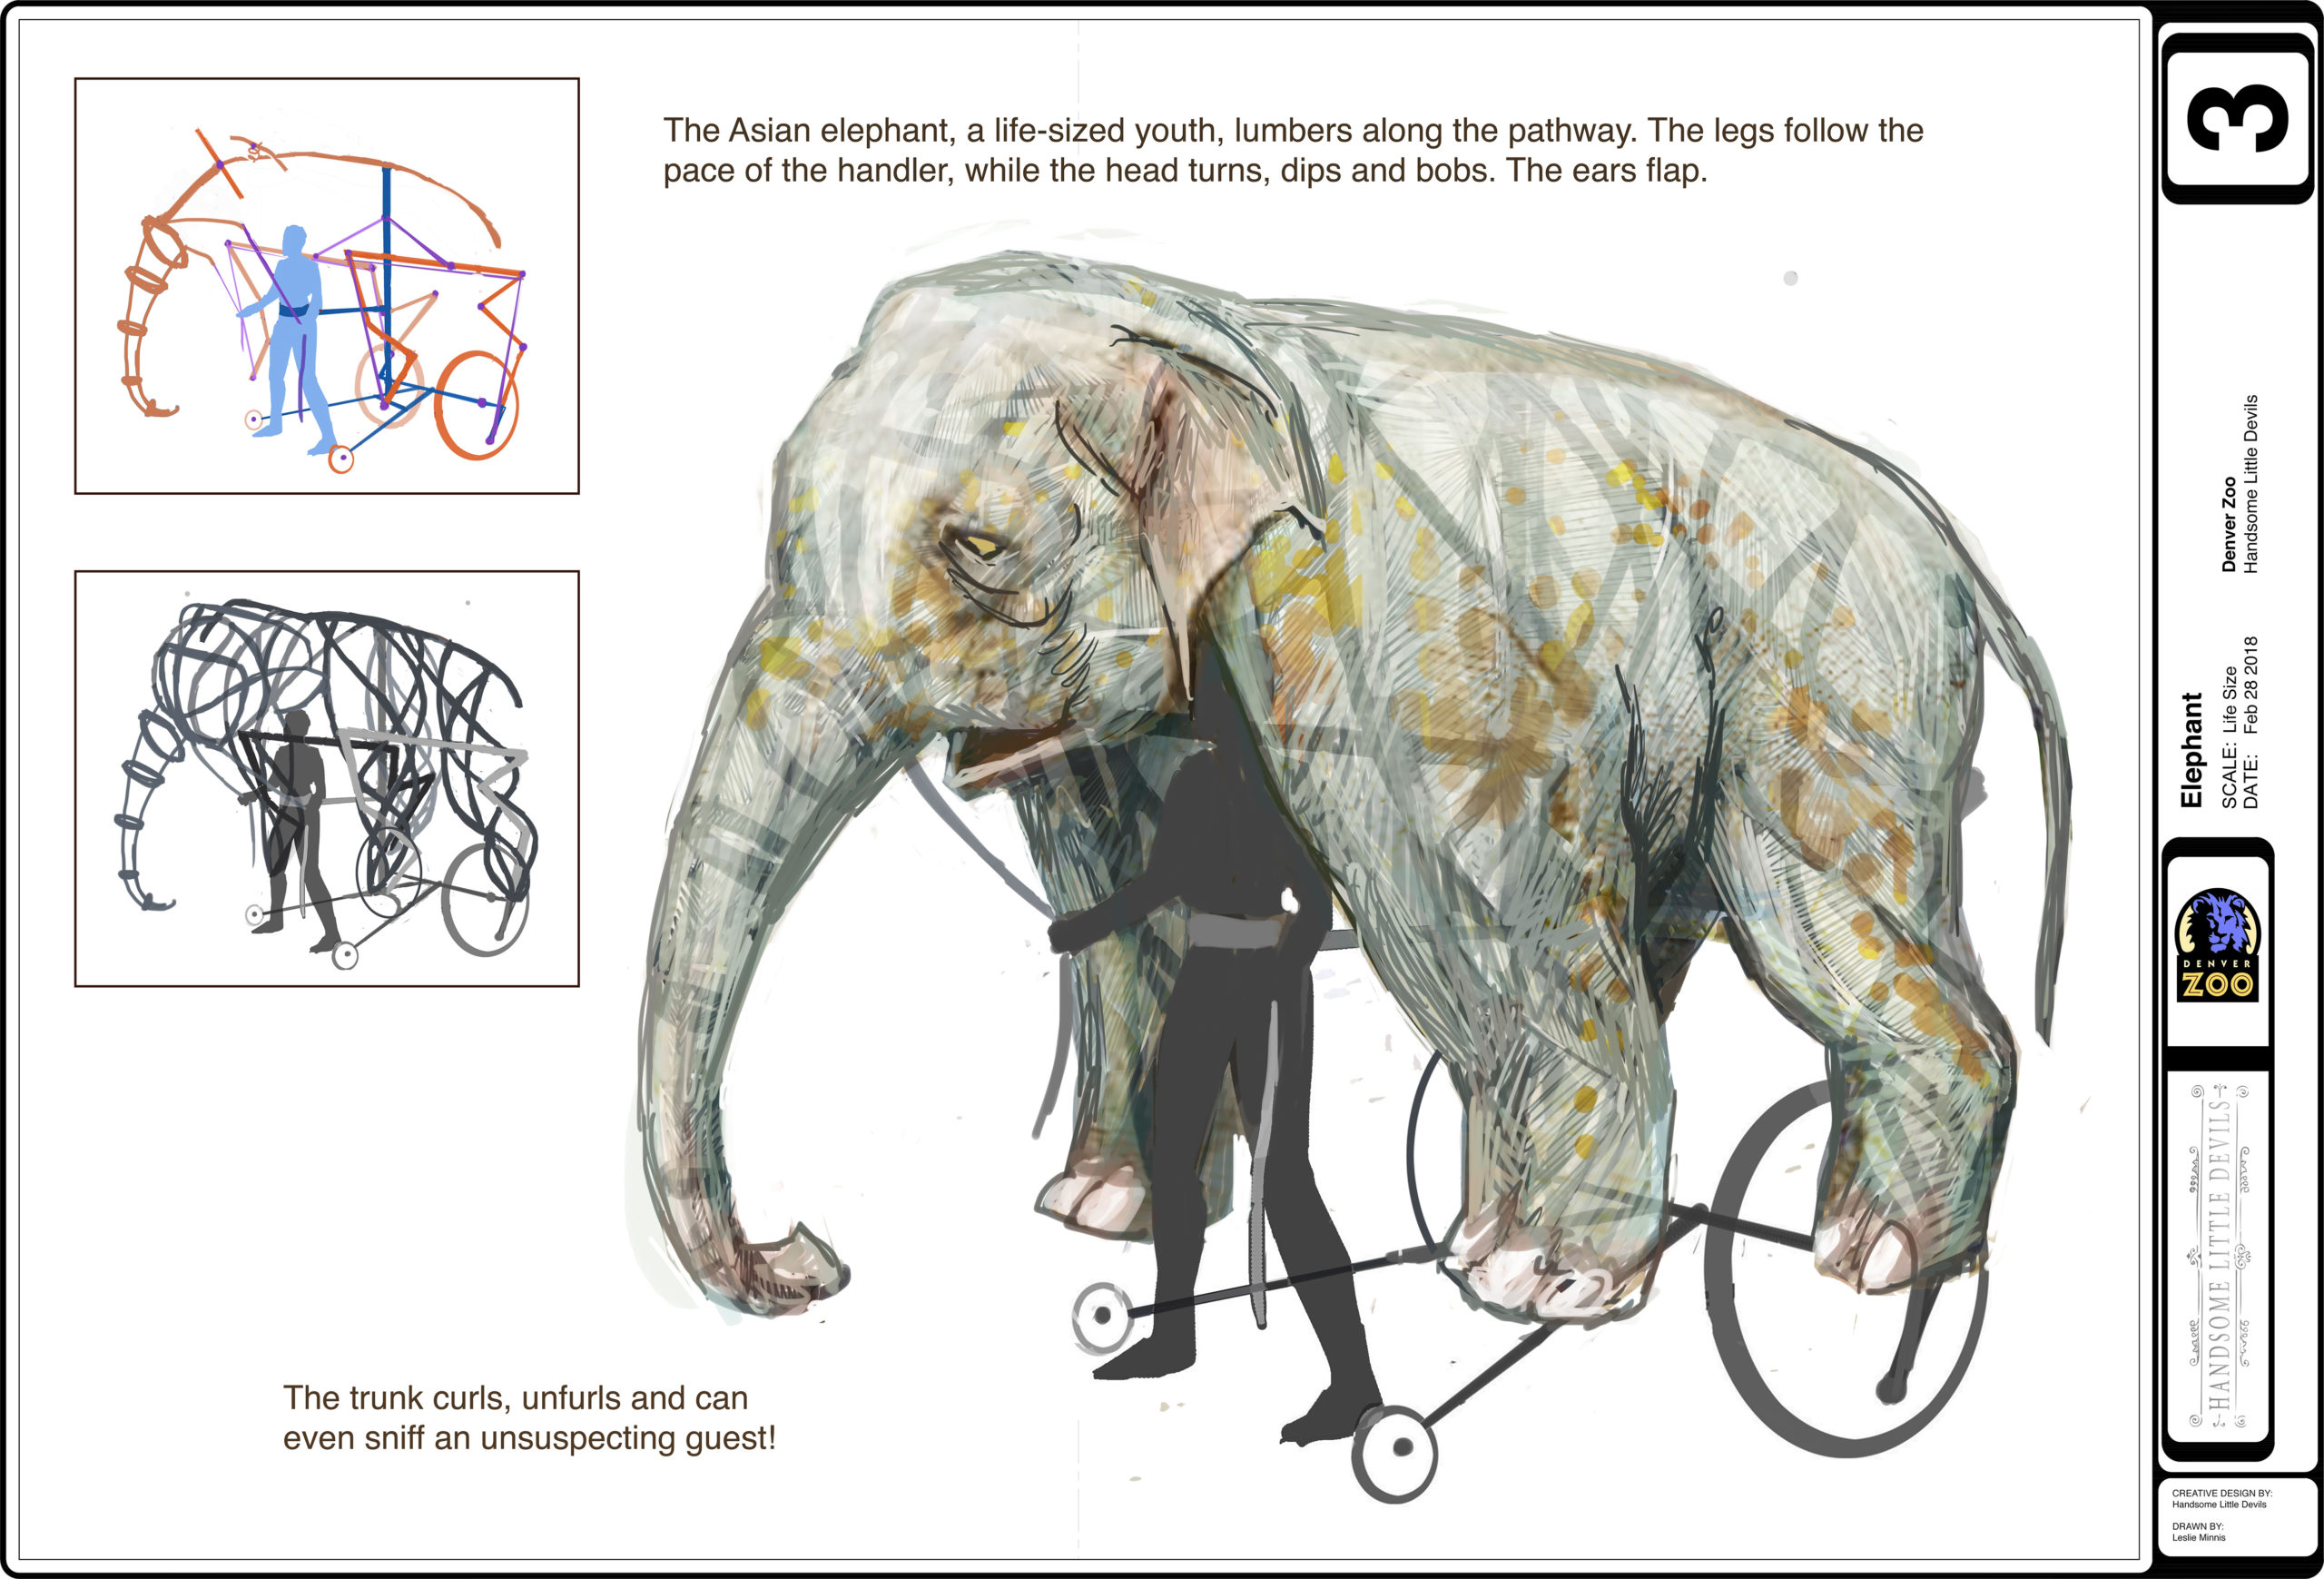 Elephant Design & Fabrication